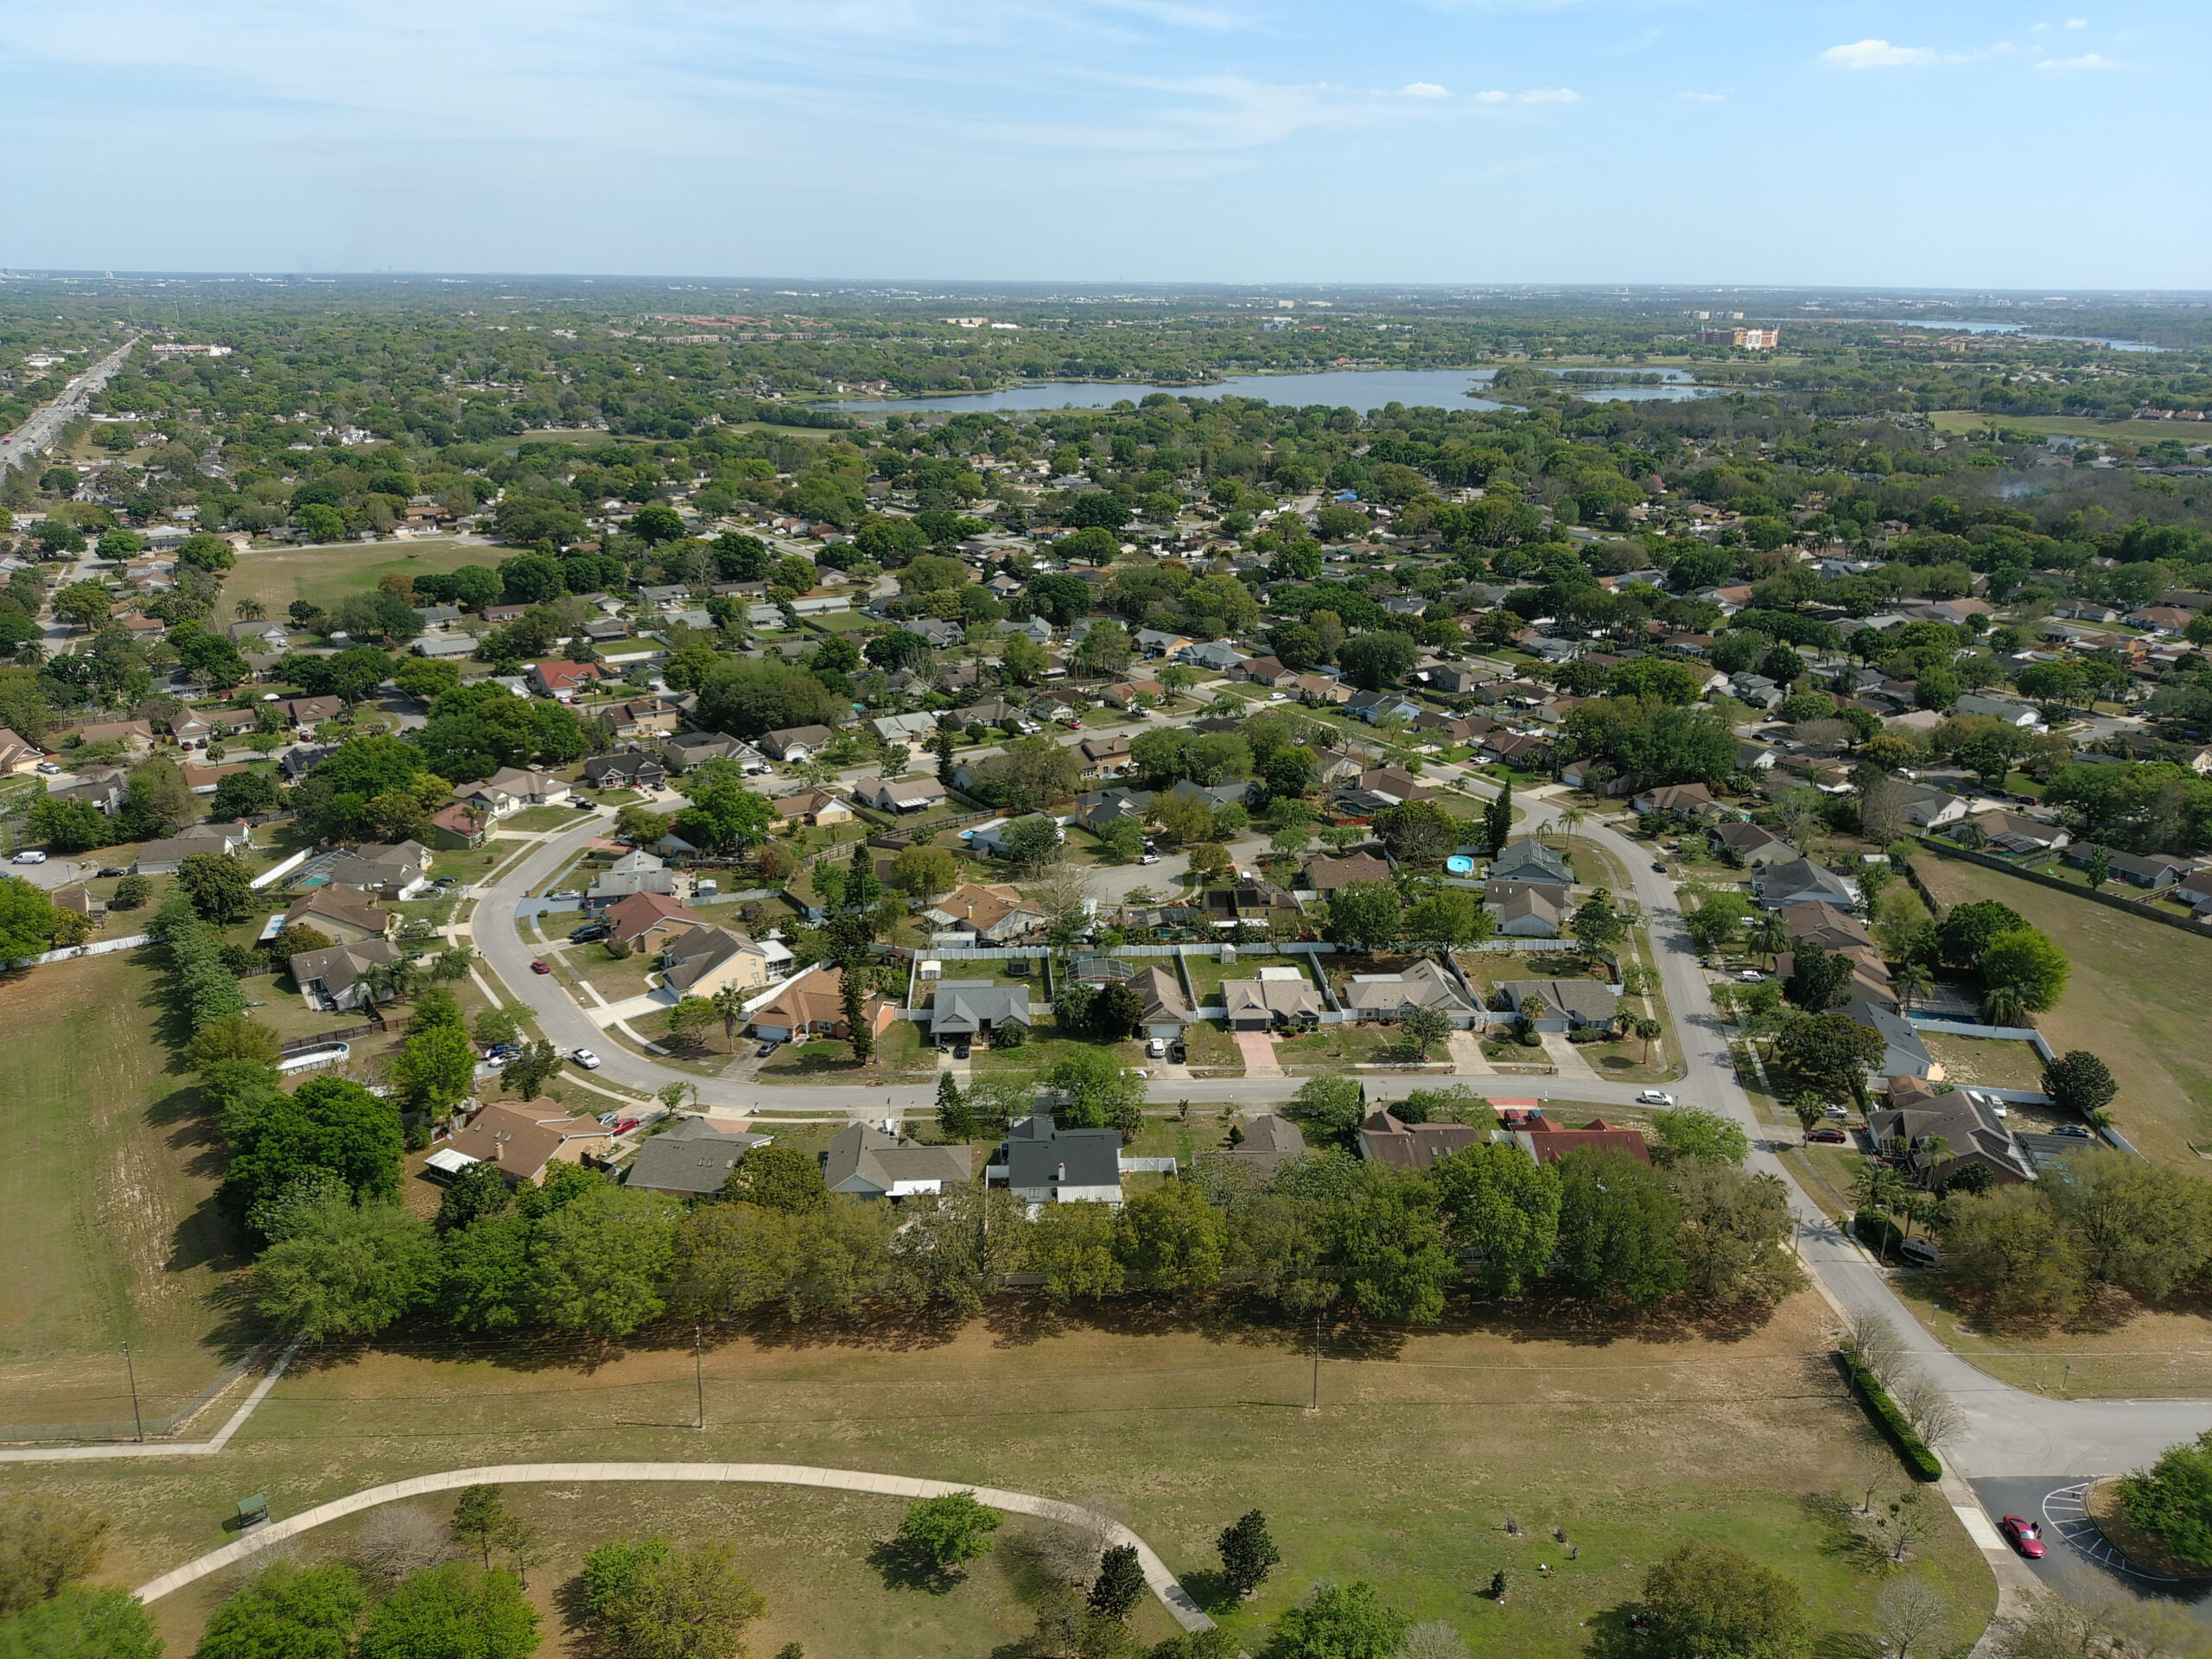 A view of a circular suburb